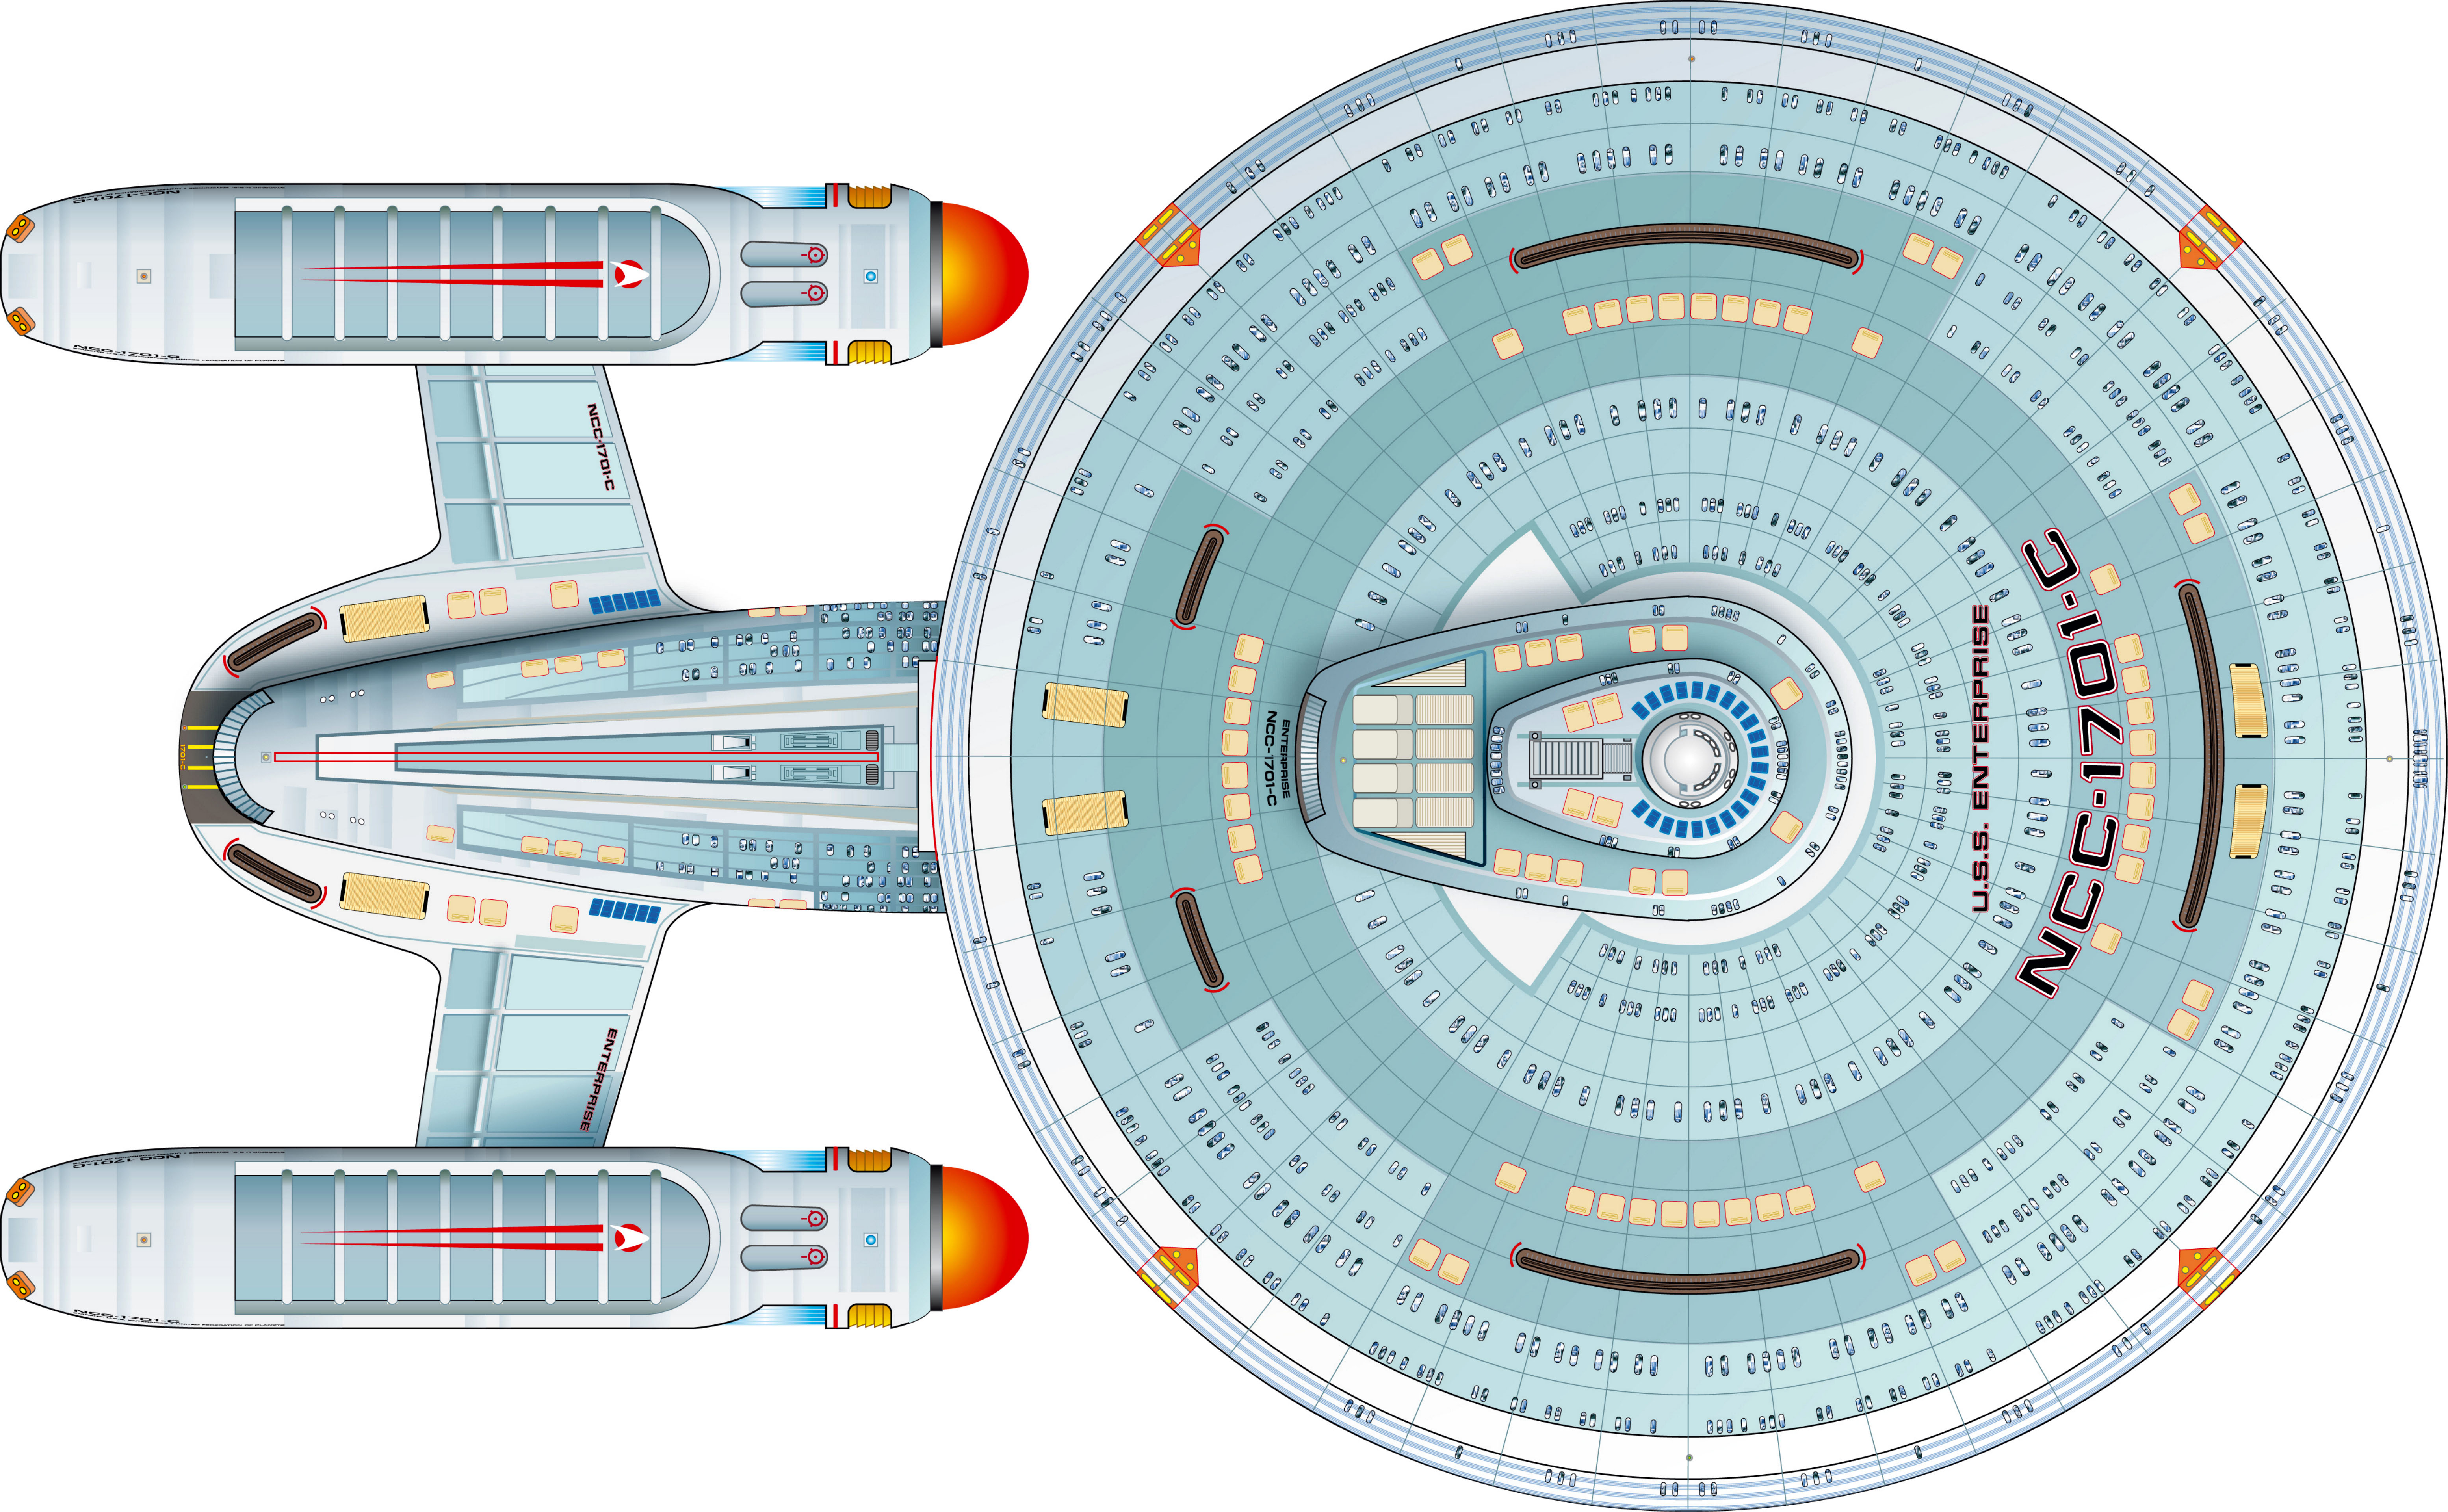 General 6214x3838 Star Trek spaceship Star Trek Ships USS Enterprise NCC 1701 C science fiction vehicle digital art